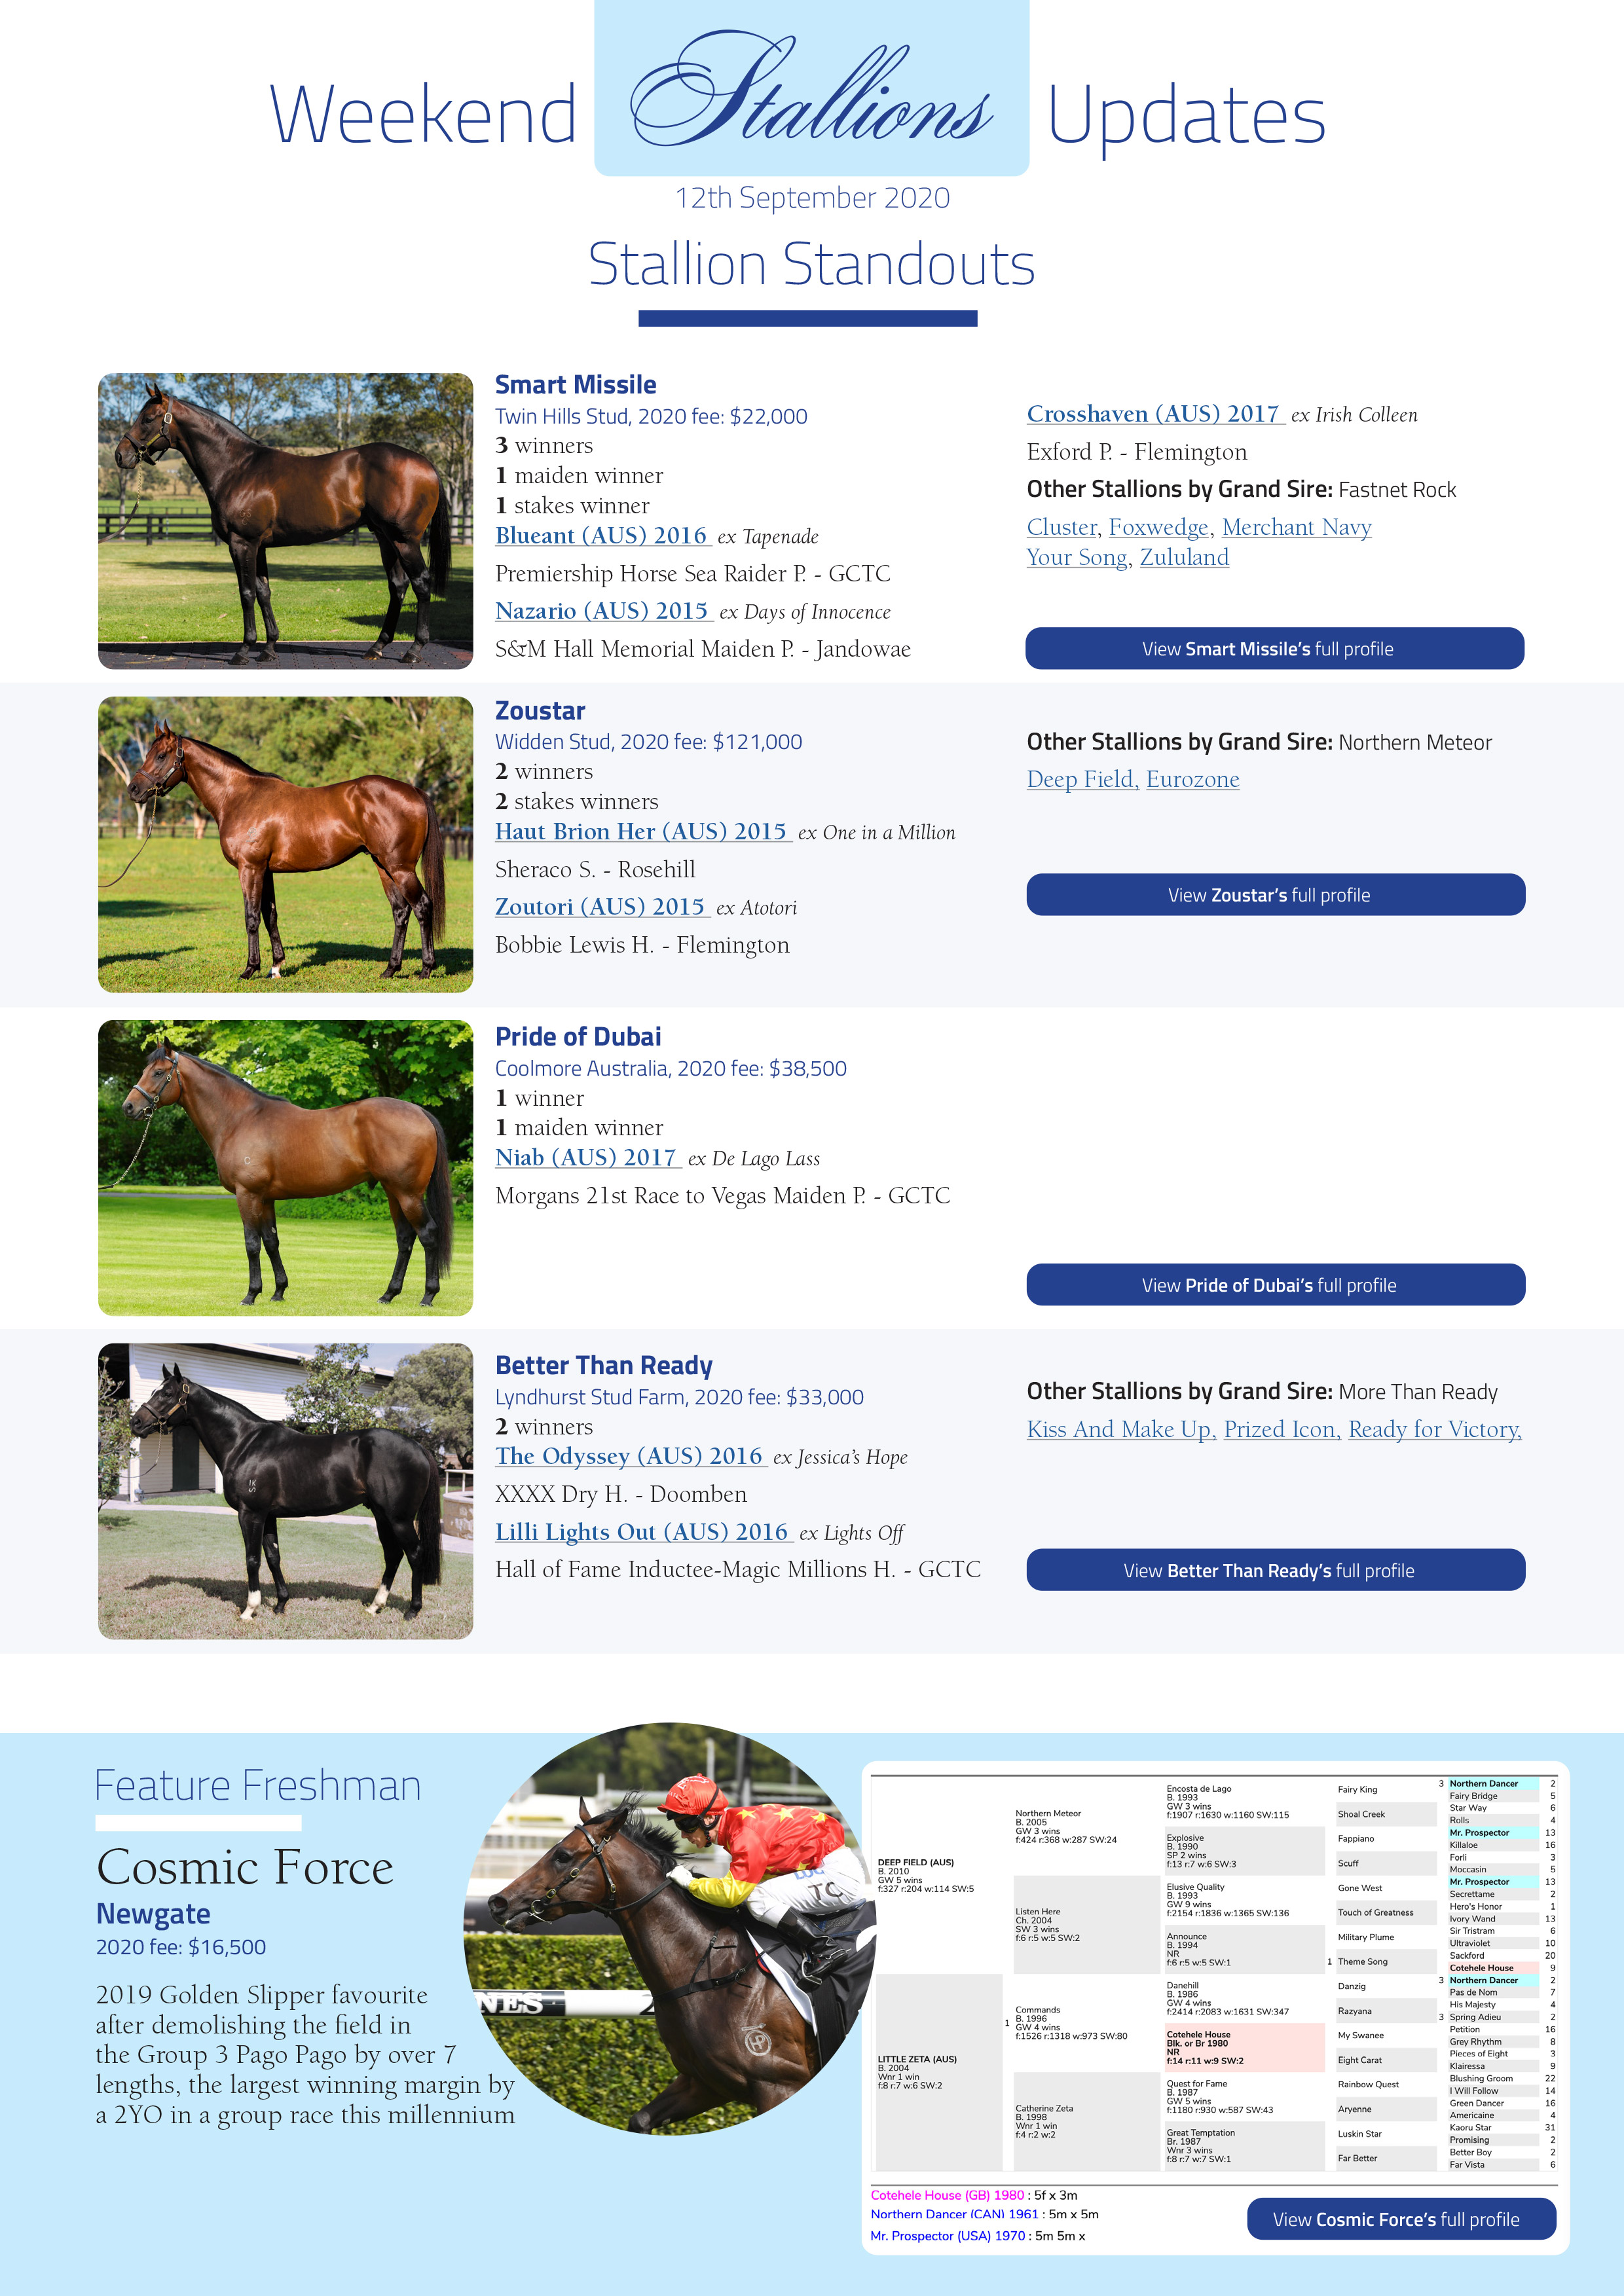 https://www.stallions.com.au/wp-content/uploads/2020/09/12-09-2020-1.jpg